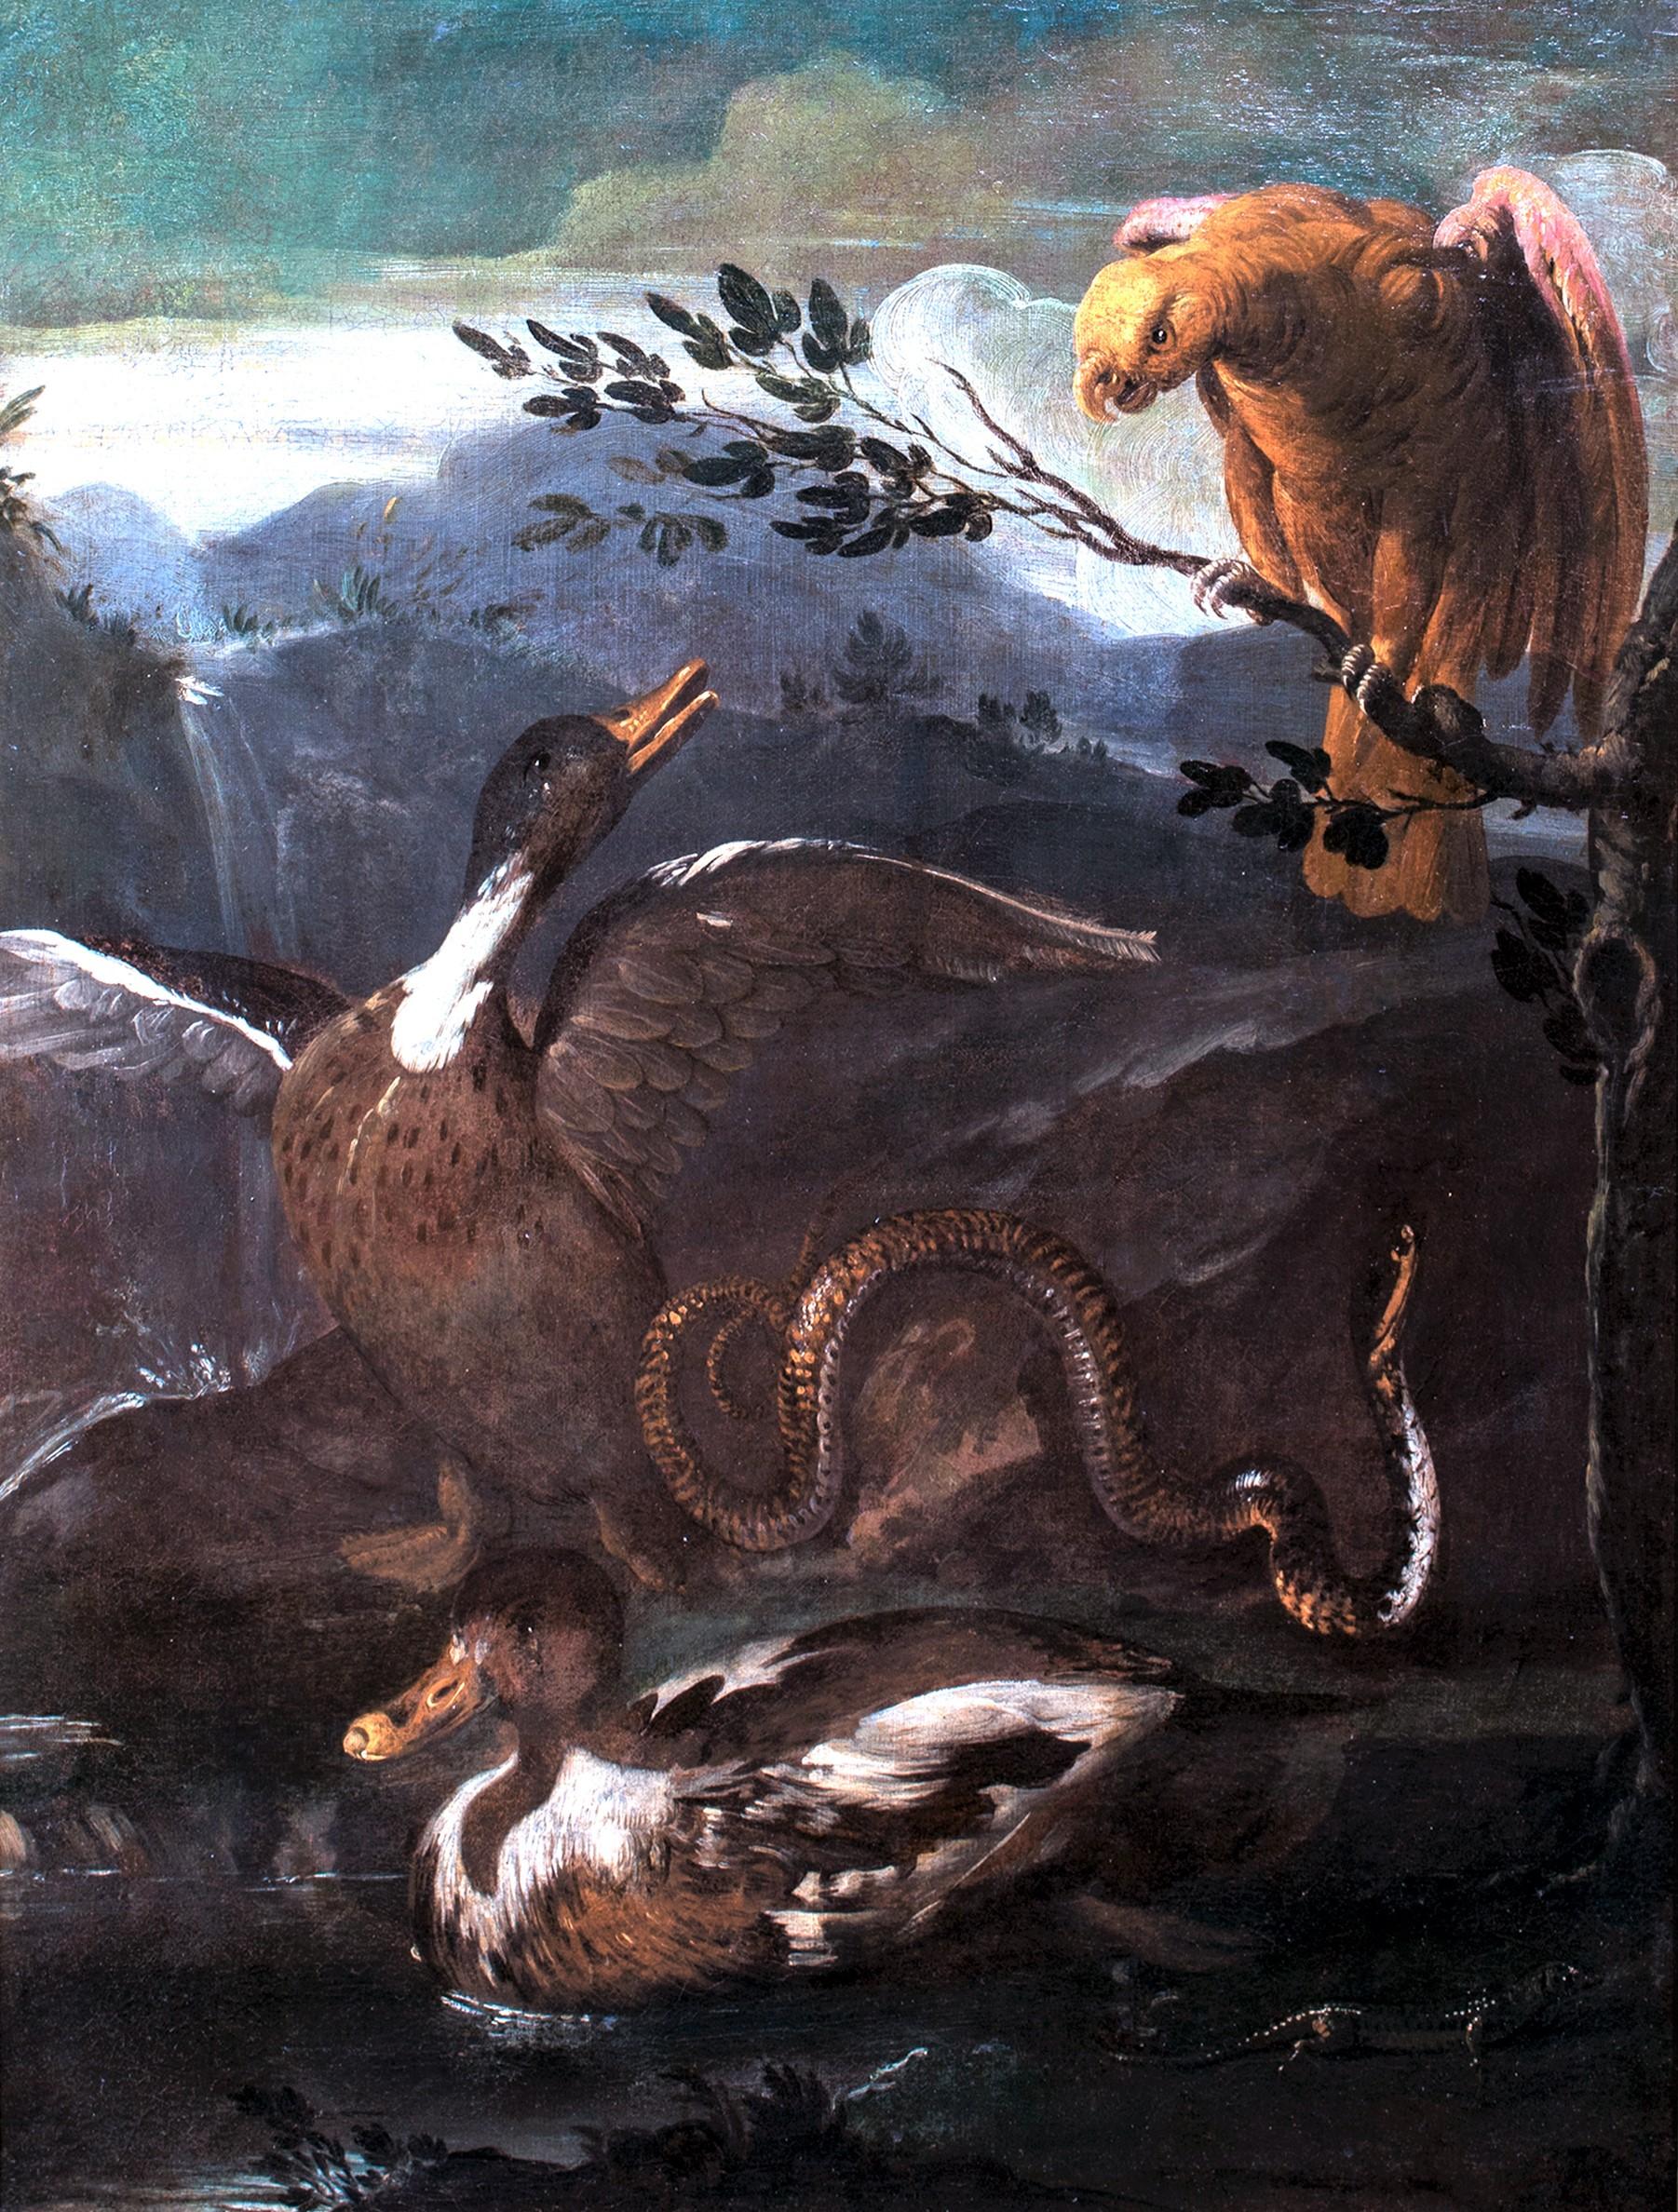 Parrot, Snake, Lizard and Ducks, 17th Century  Genoese School